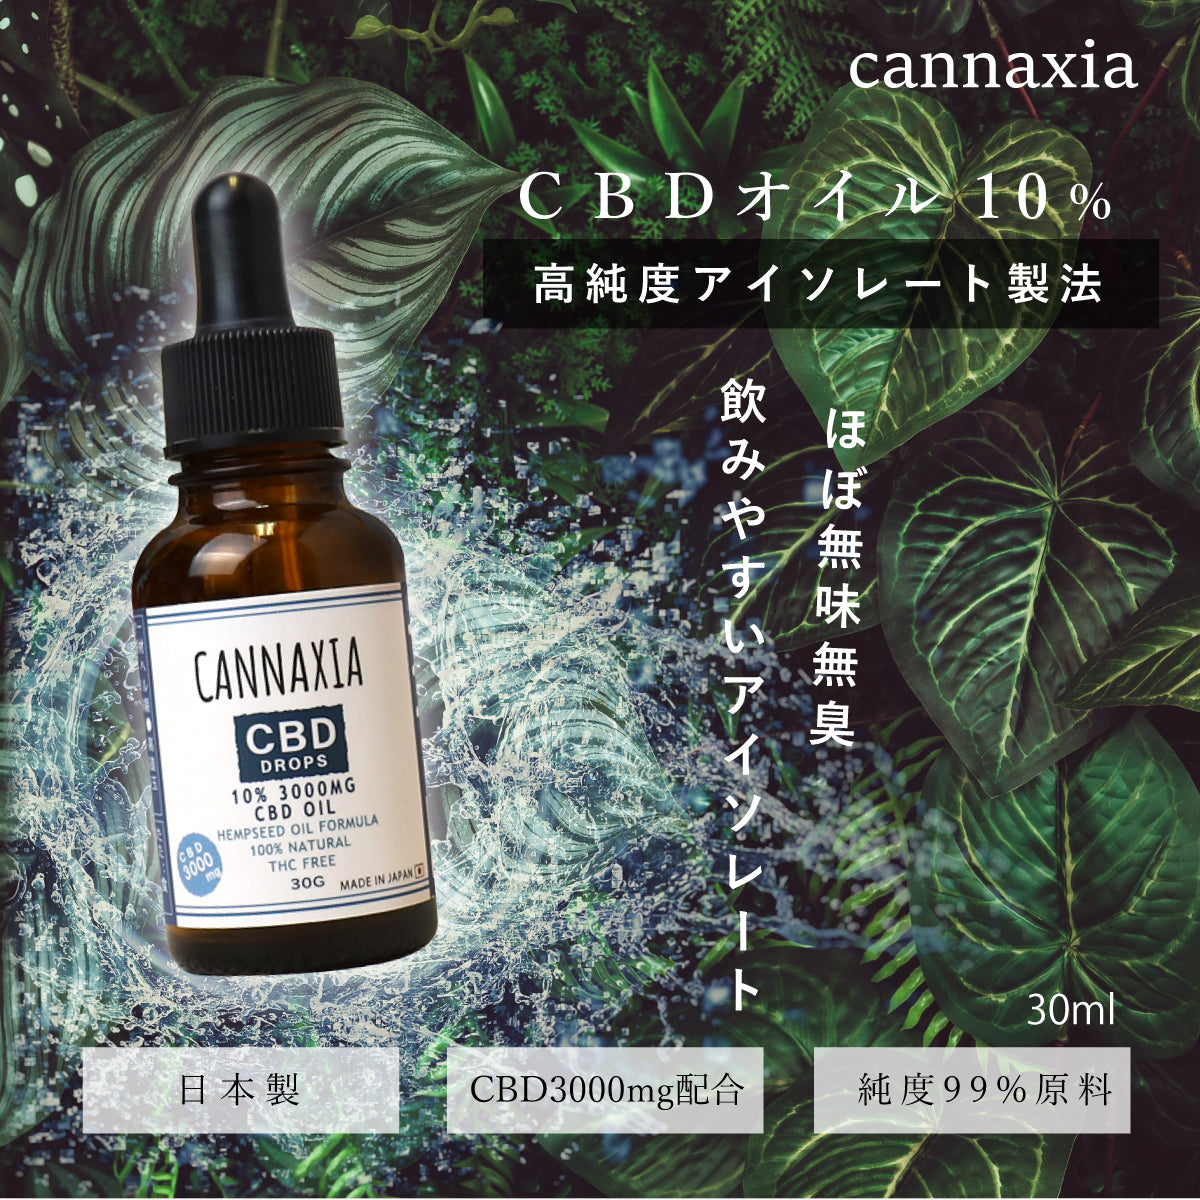 CANNAXIA カンナシア CBDオイル 高濃度CBD10% 3000mg配合 アイソレート製法 大容量 30ml 日本製